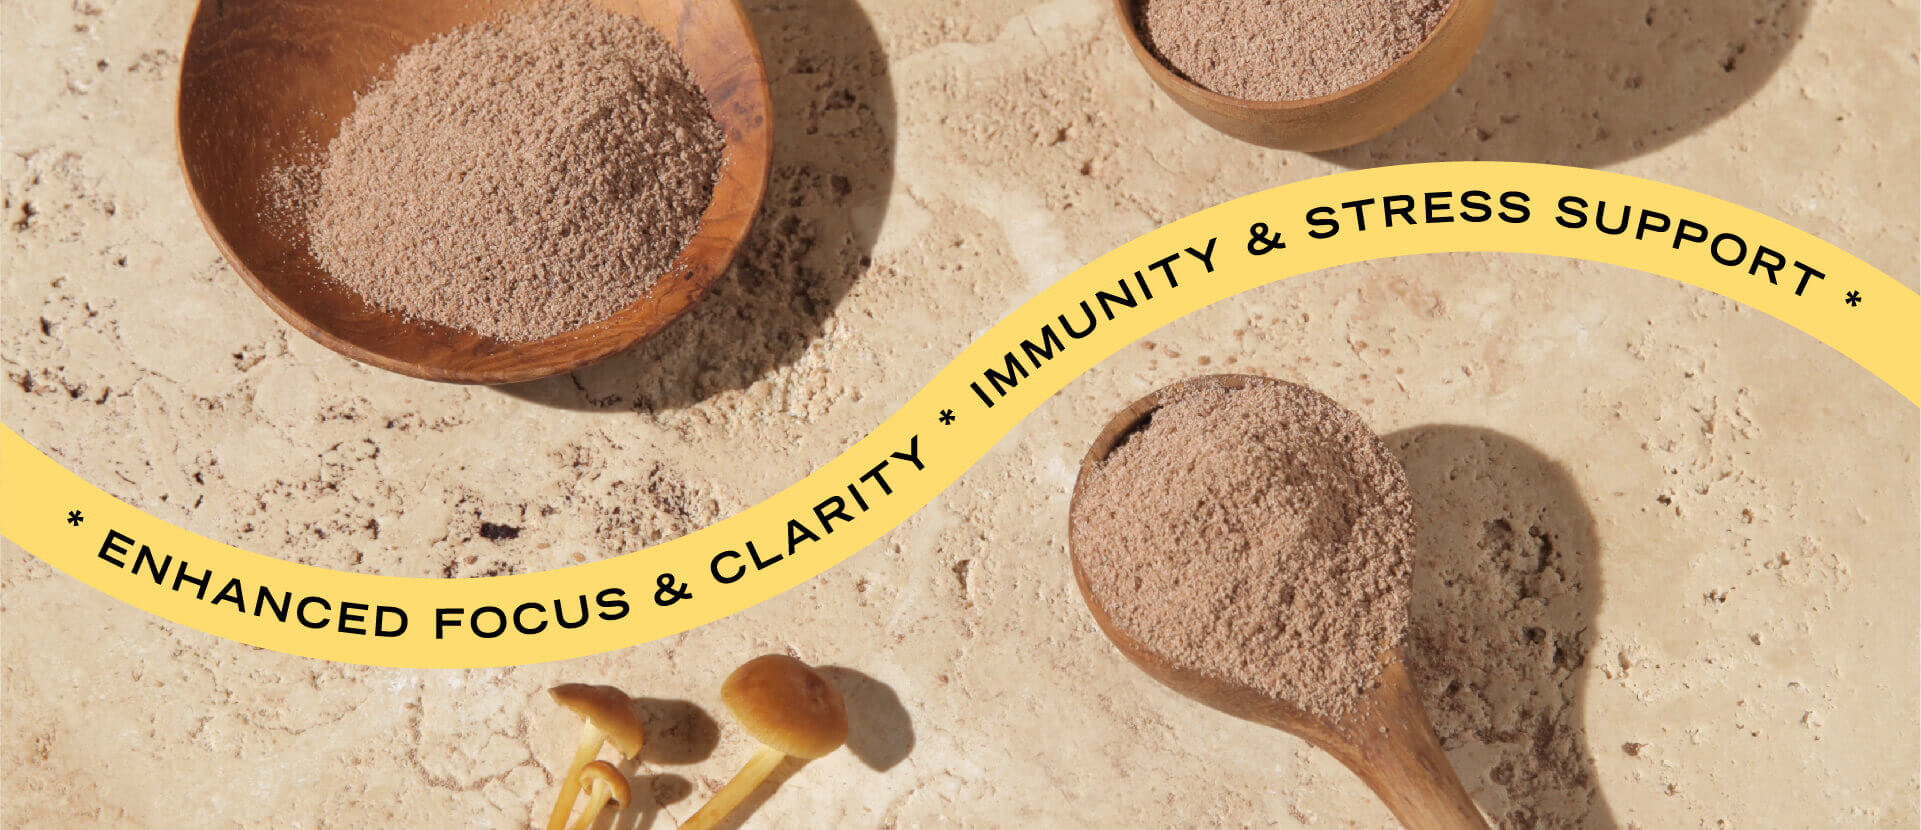 Enhanced Focus & Clarity | Immunity & Stress Support